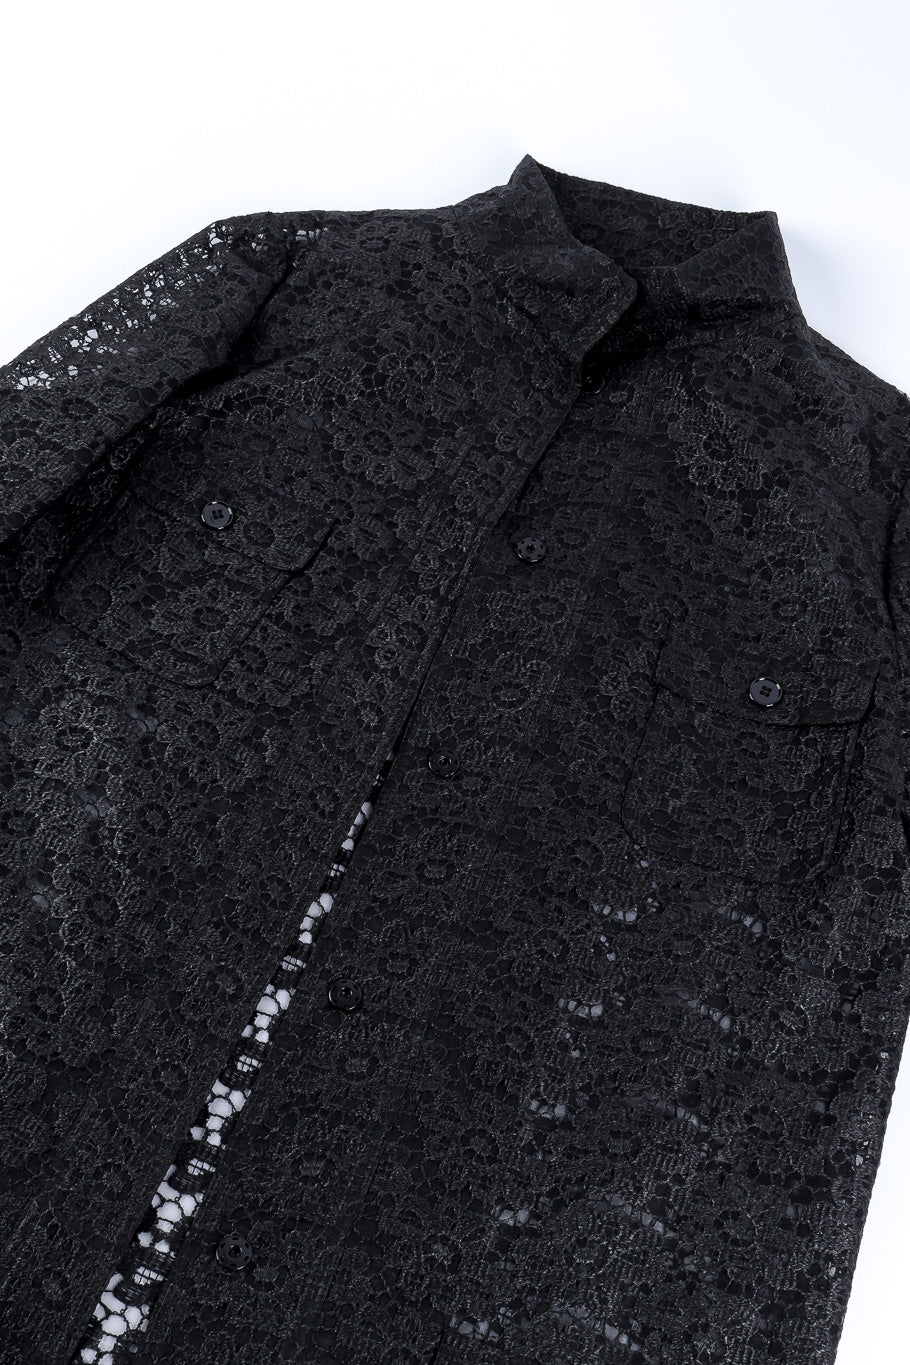 Dolce & Gabbana lace pattern coat flat-lay @recessla